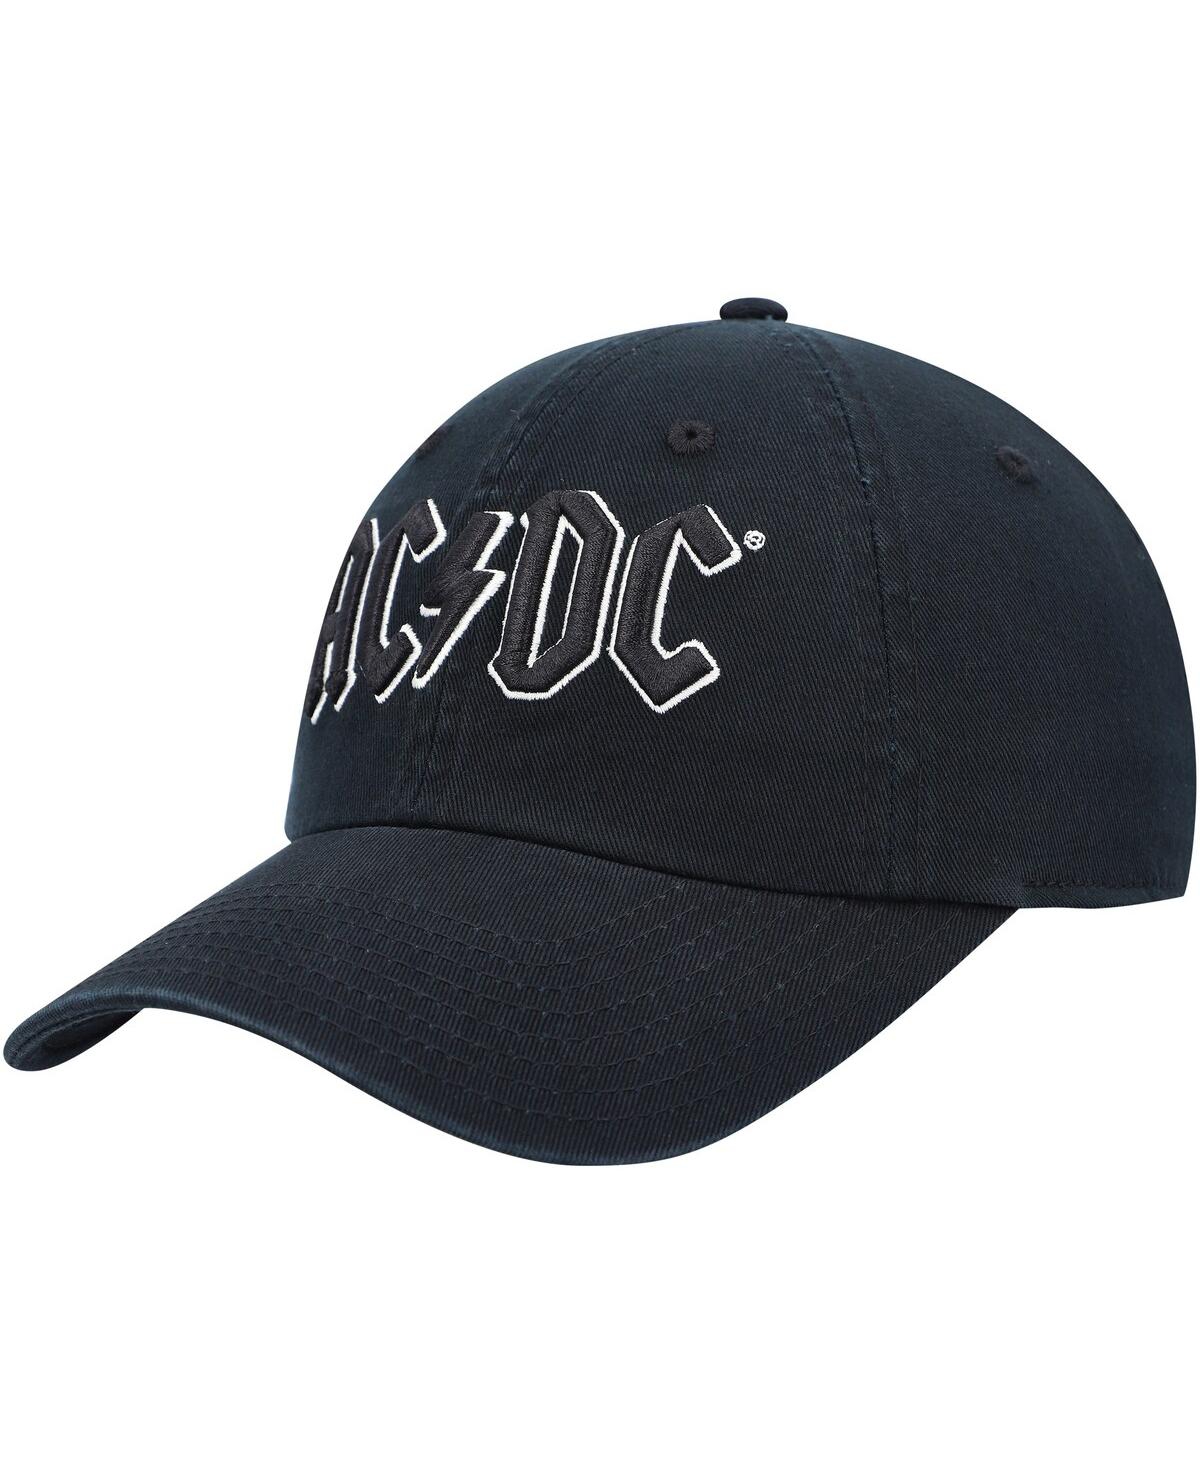 Shop American Needle Men's  Black Ac, Dc Ballpark Adjustable Hat